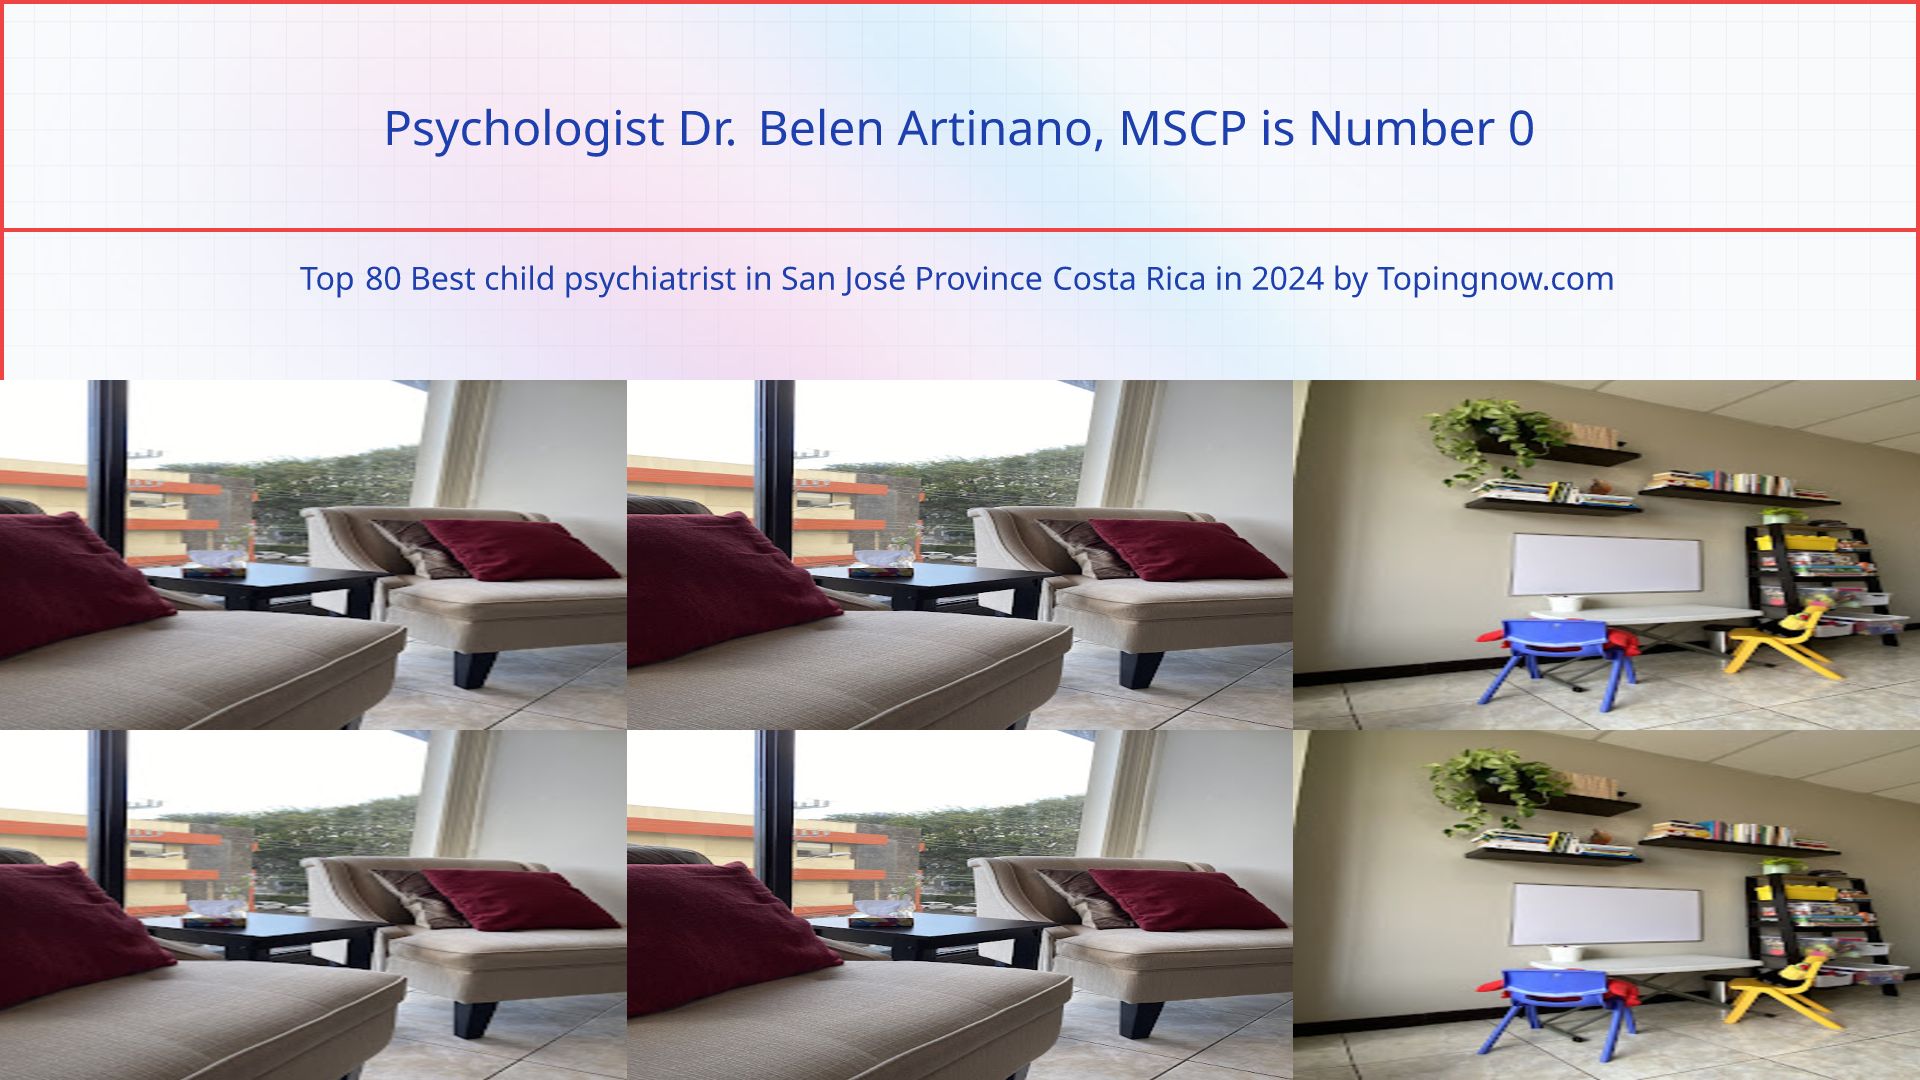 Psychologist Dr. Belen Artinano, MSCP: Top 80 Best child psychiatrist in San José Province Costa Rica in 2024